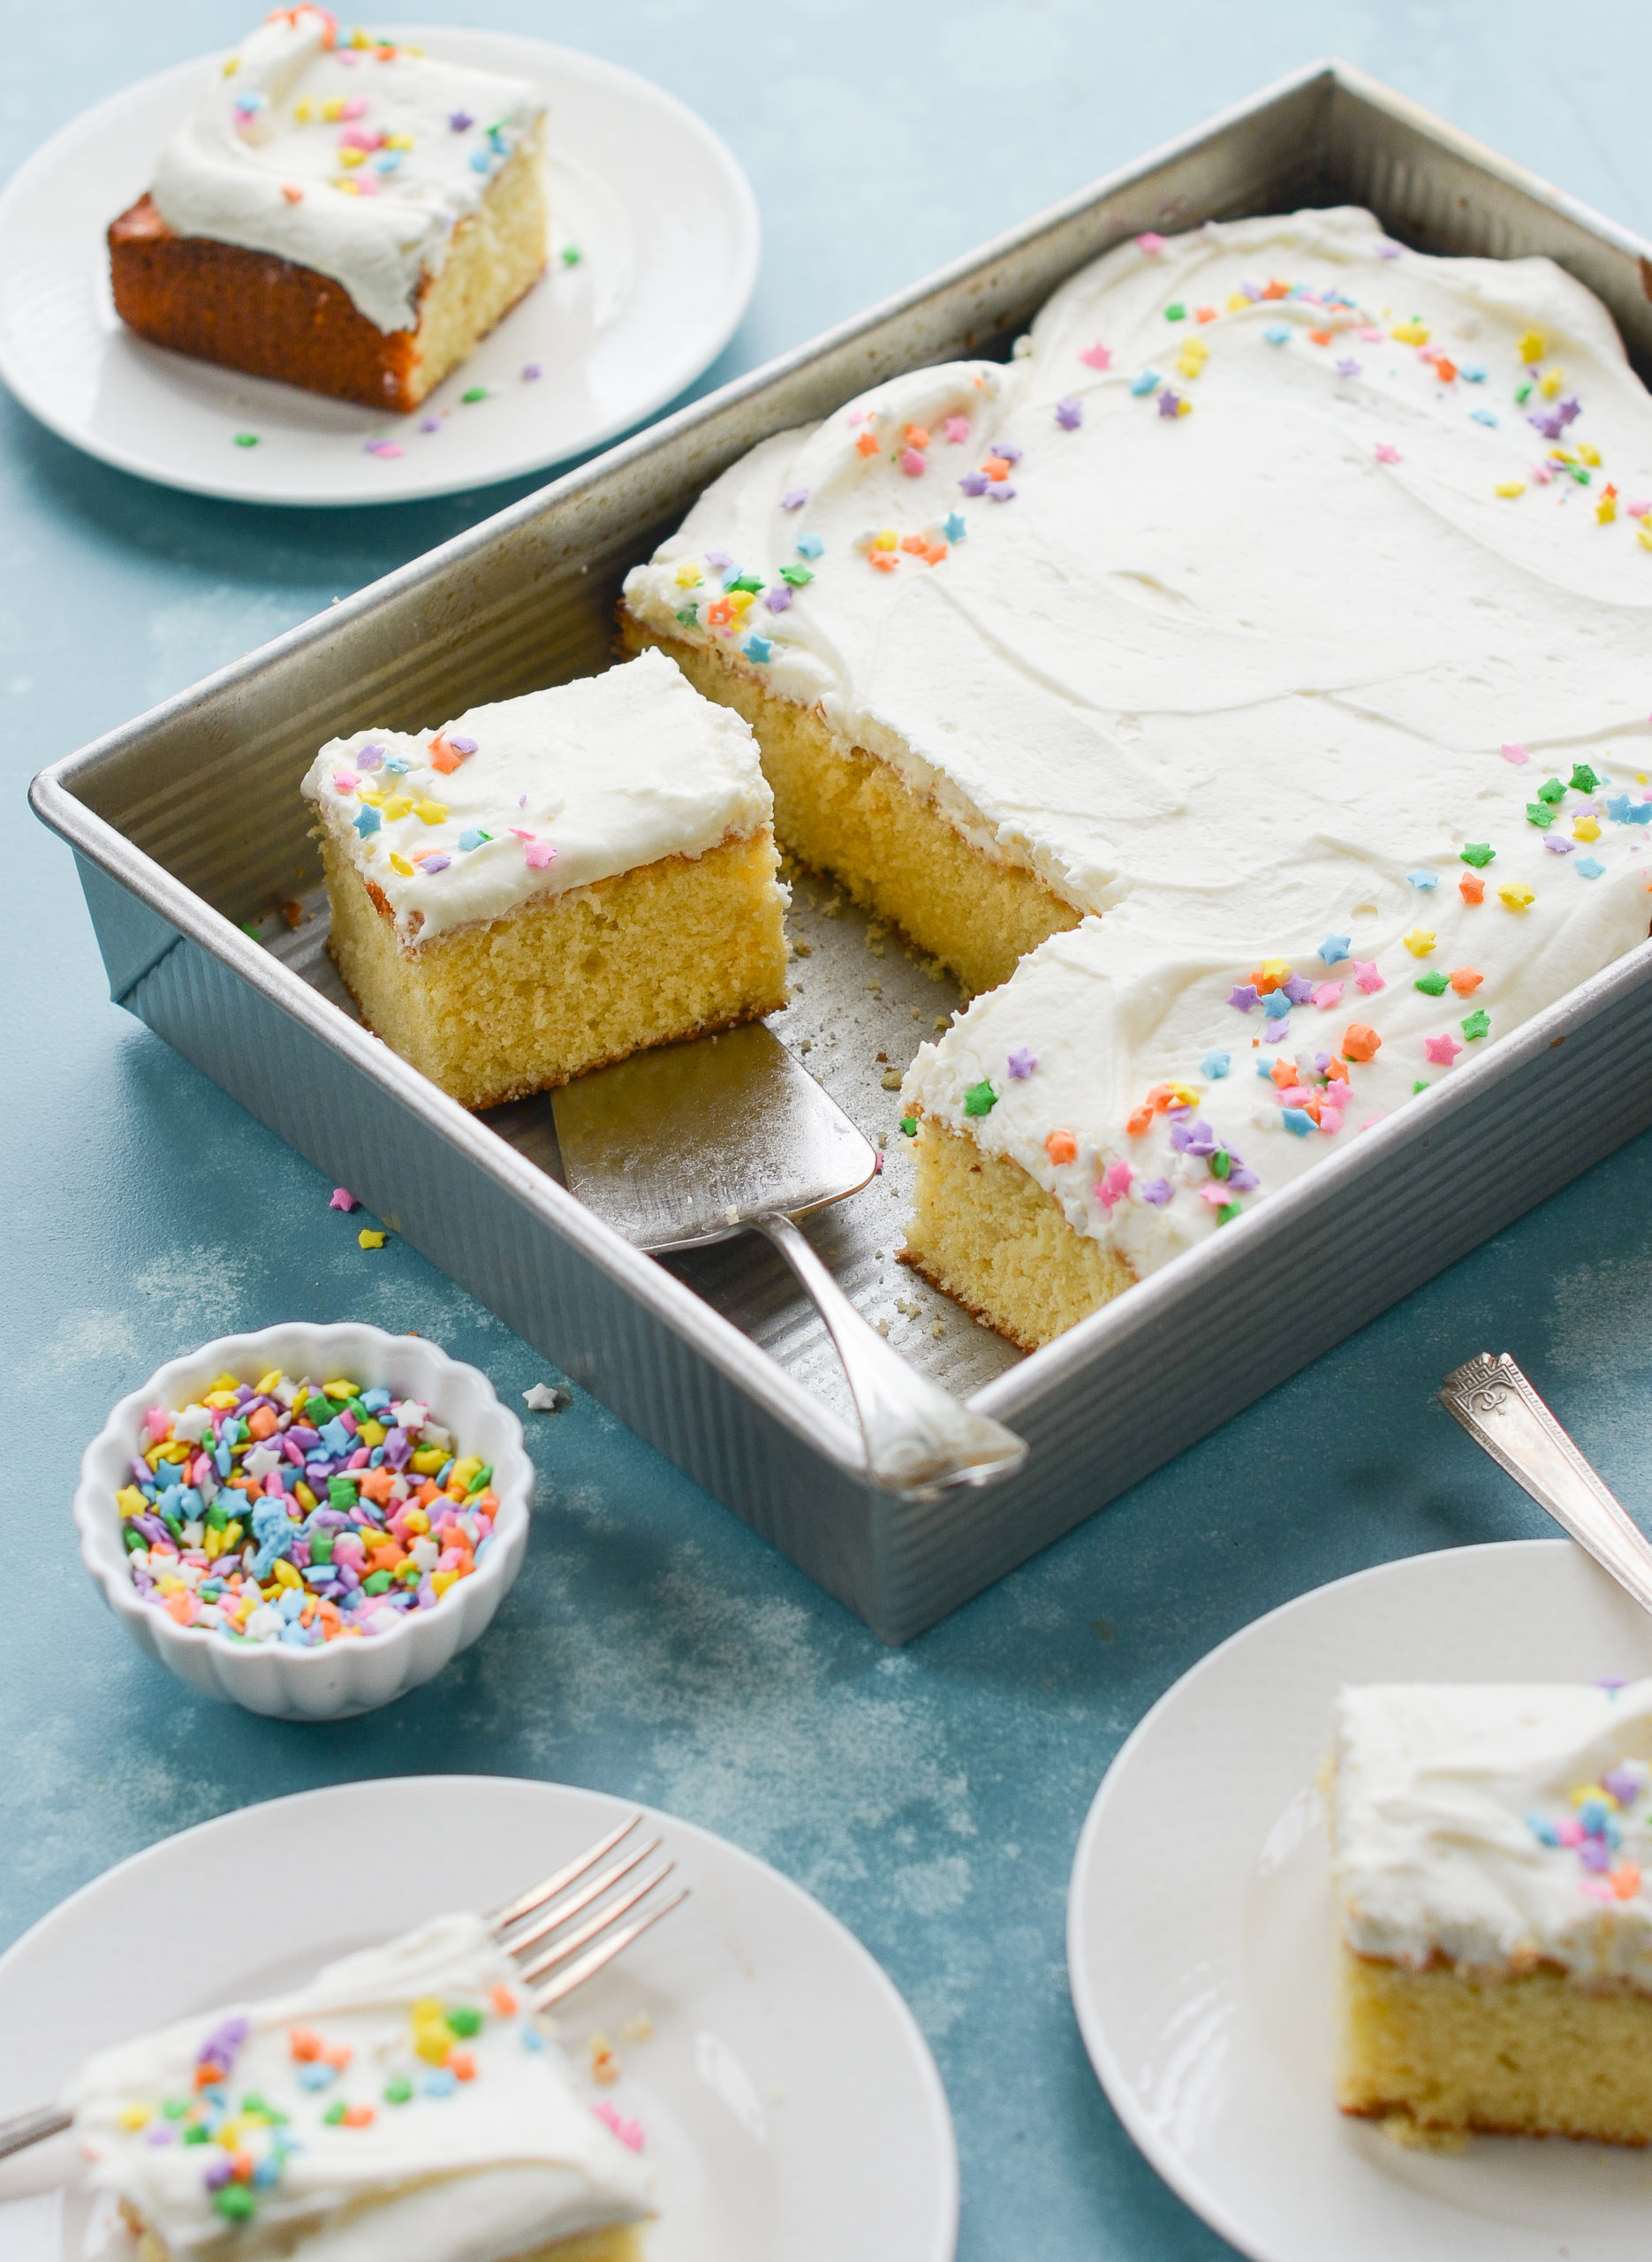 Easy Birthday Cake Ideas | DIY Simple Celebration Cake